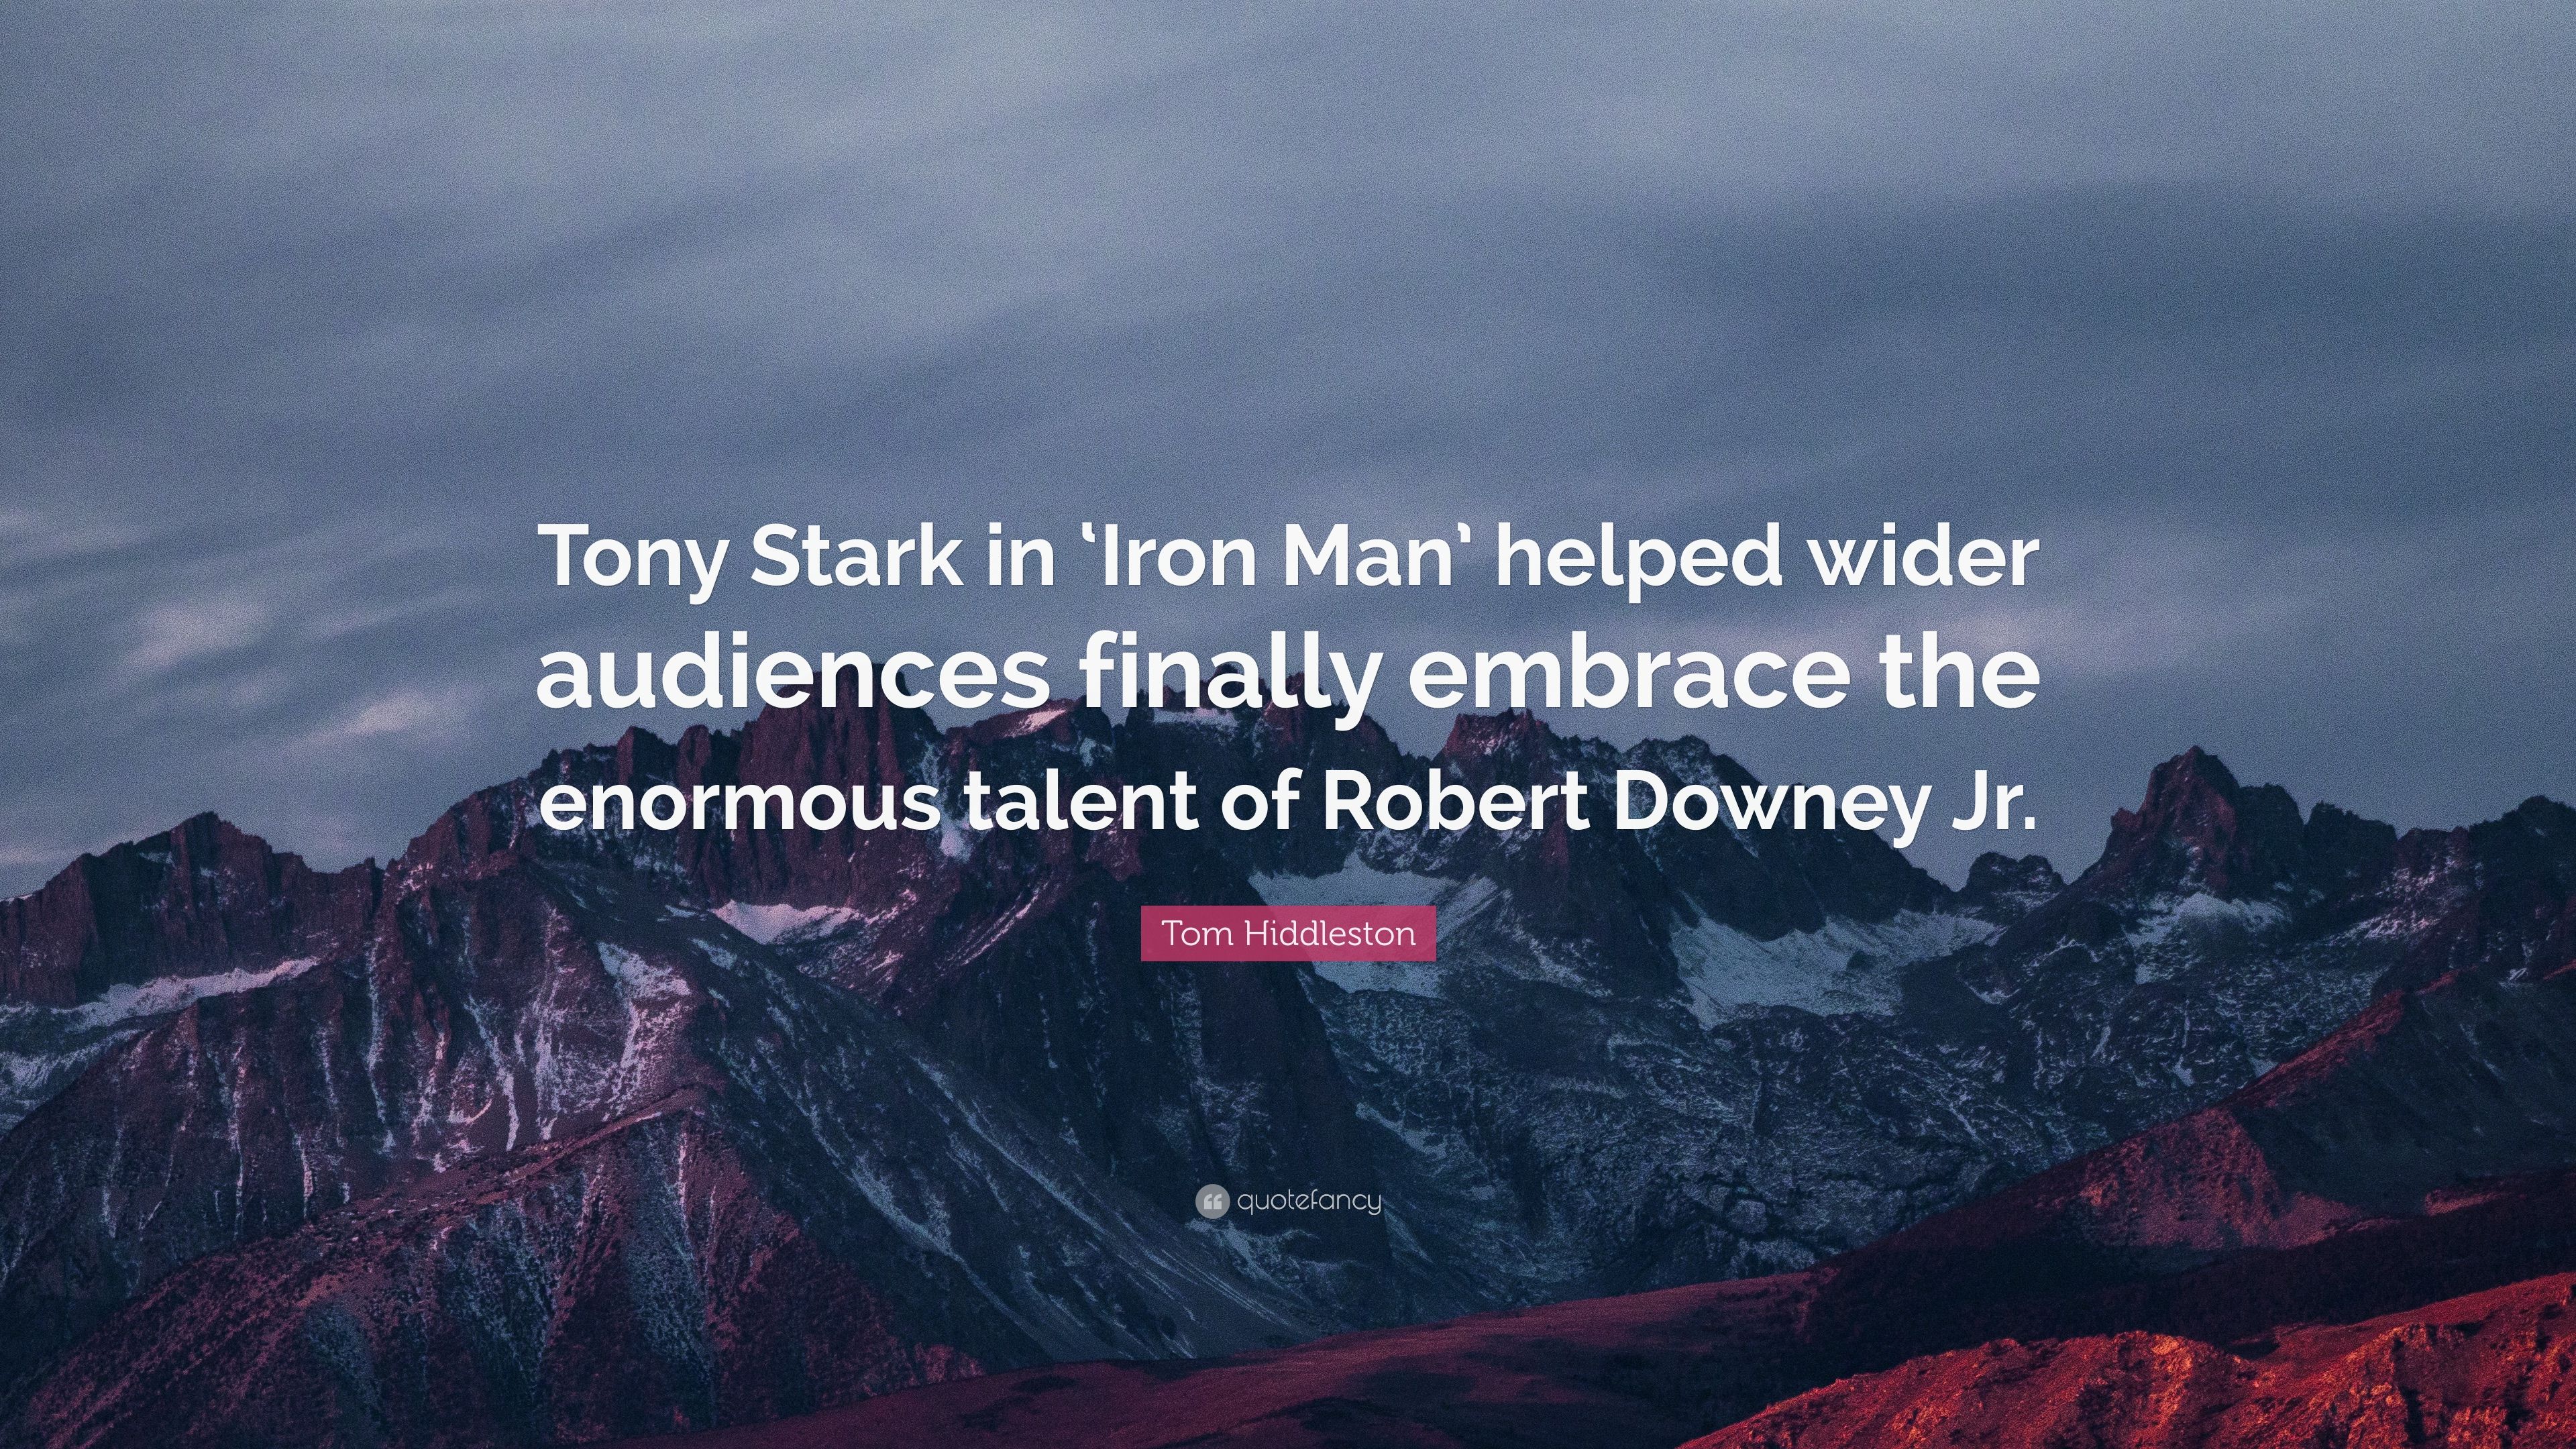 Tom Hiddleston Quote: “Tony Stark in 'Iron Man' helped wider